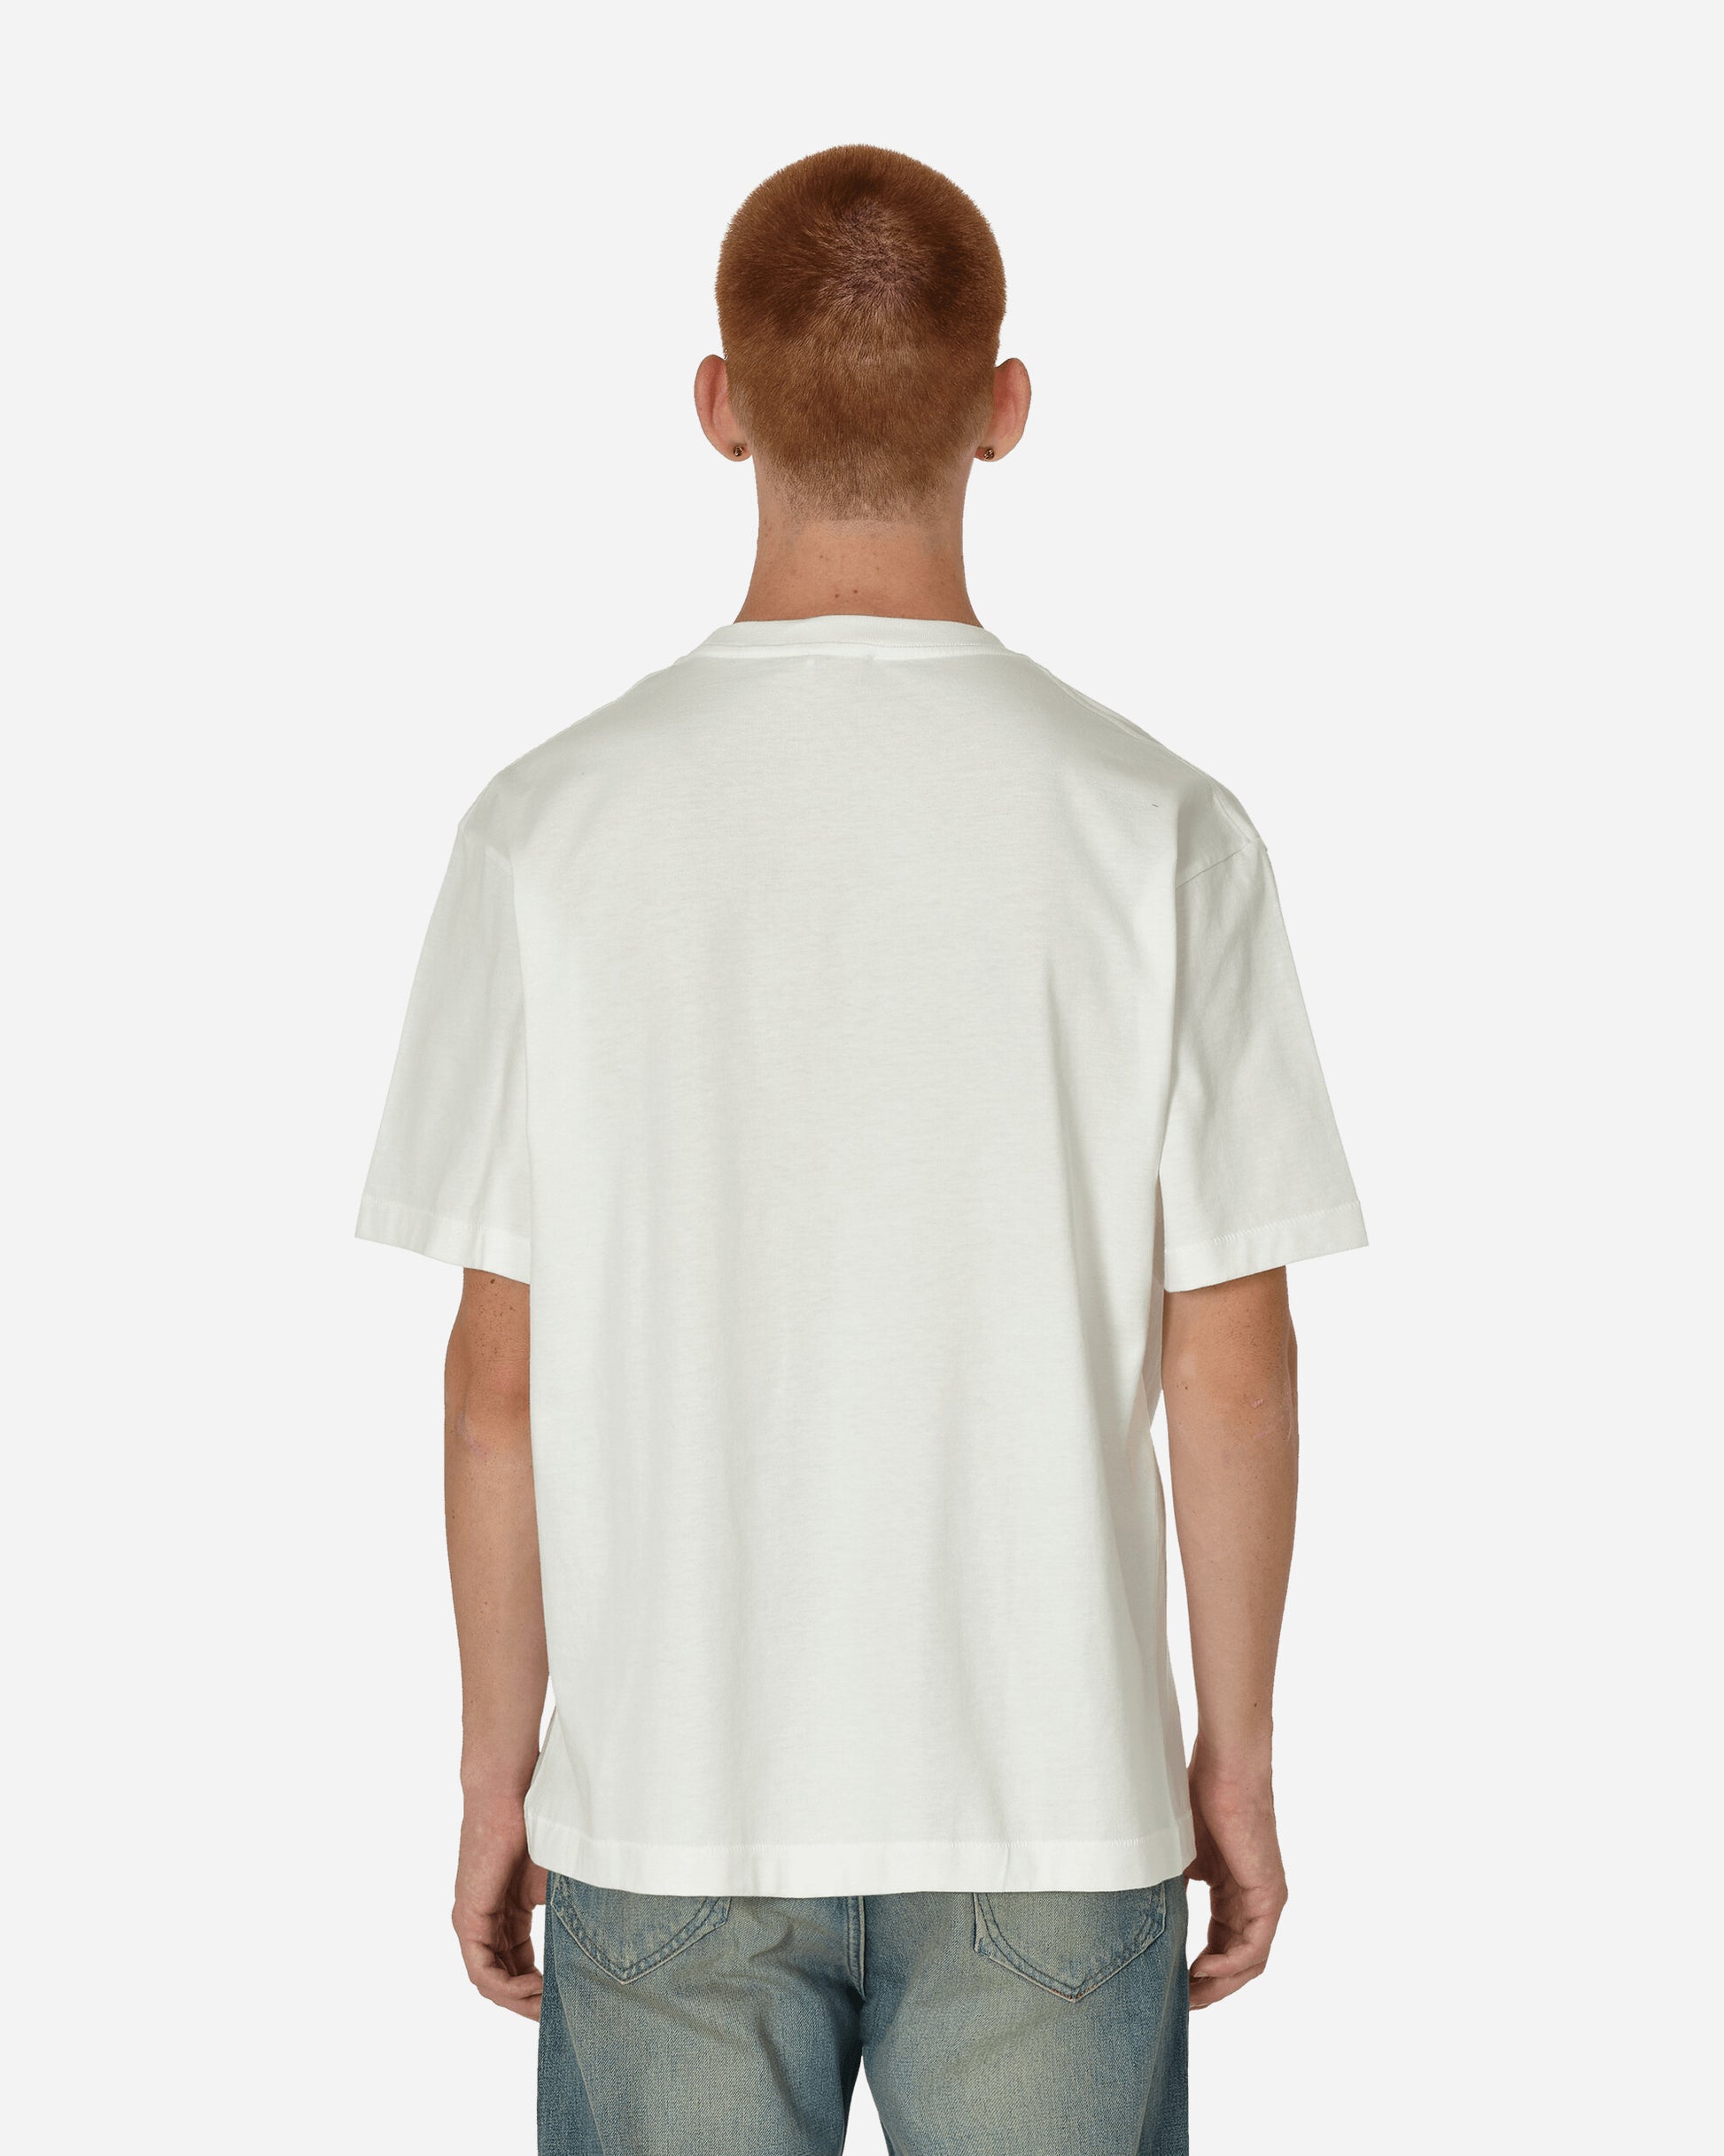 KENZO Paris Kenzo T-Shirt Off White T-Shirts Shortsleeve FD65TS1204SG 02